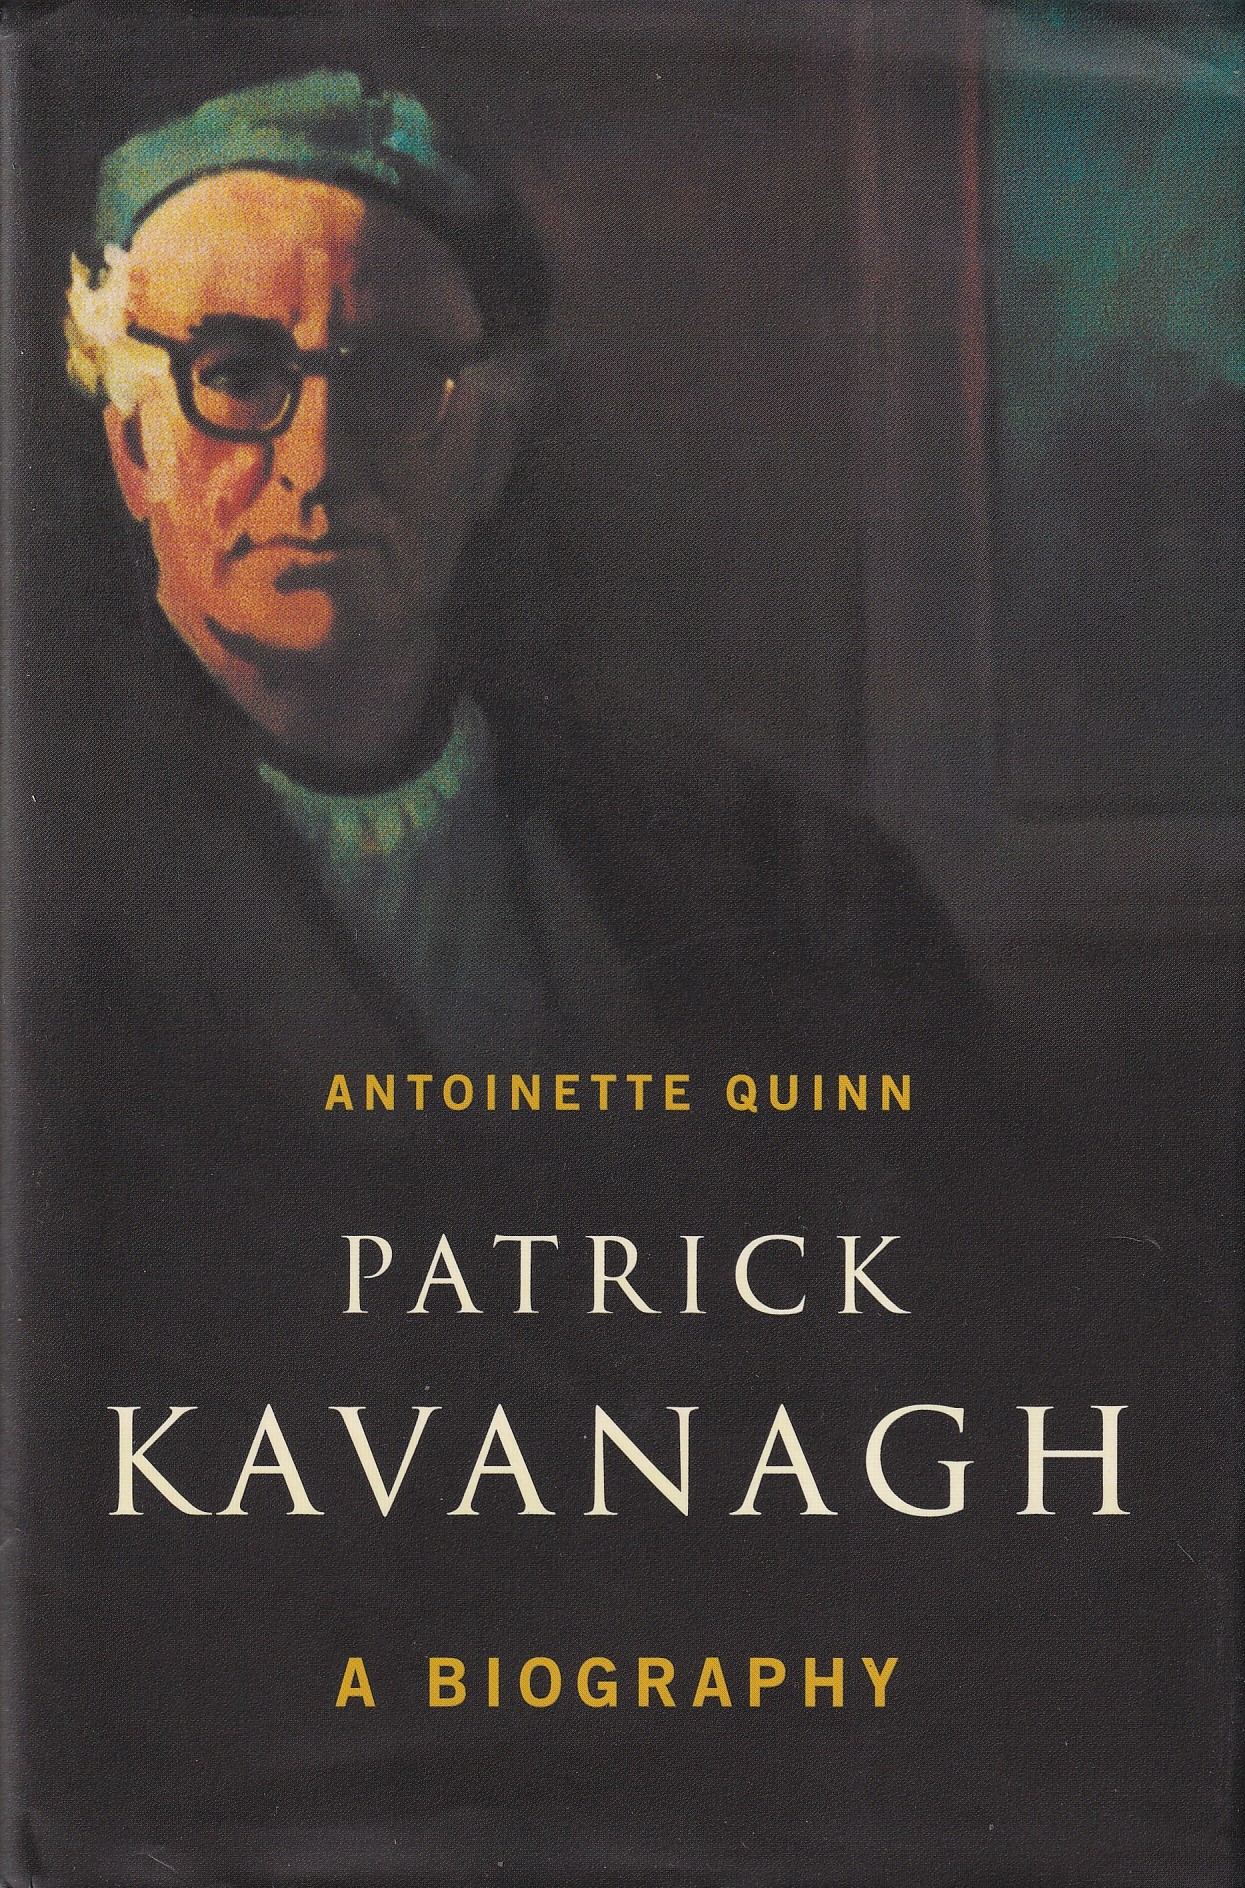 Patrick Kavanagh: A Biography by Antoinette Quinn